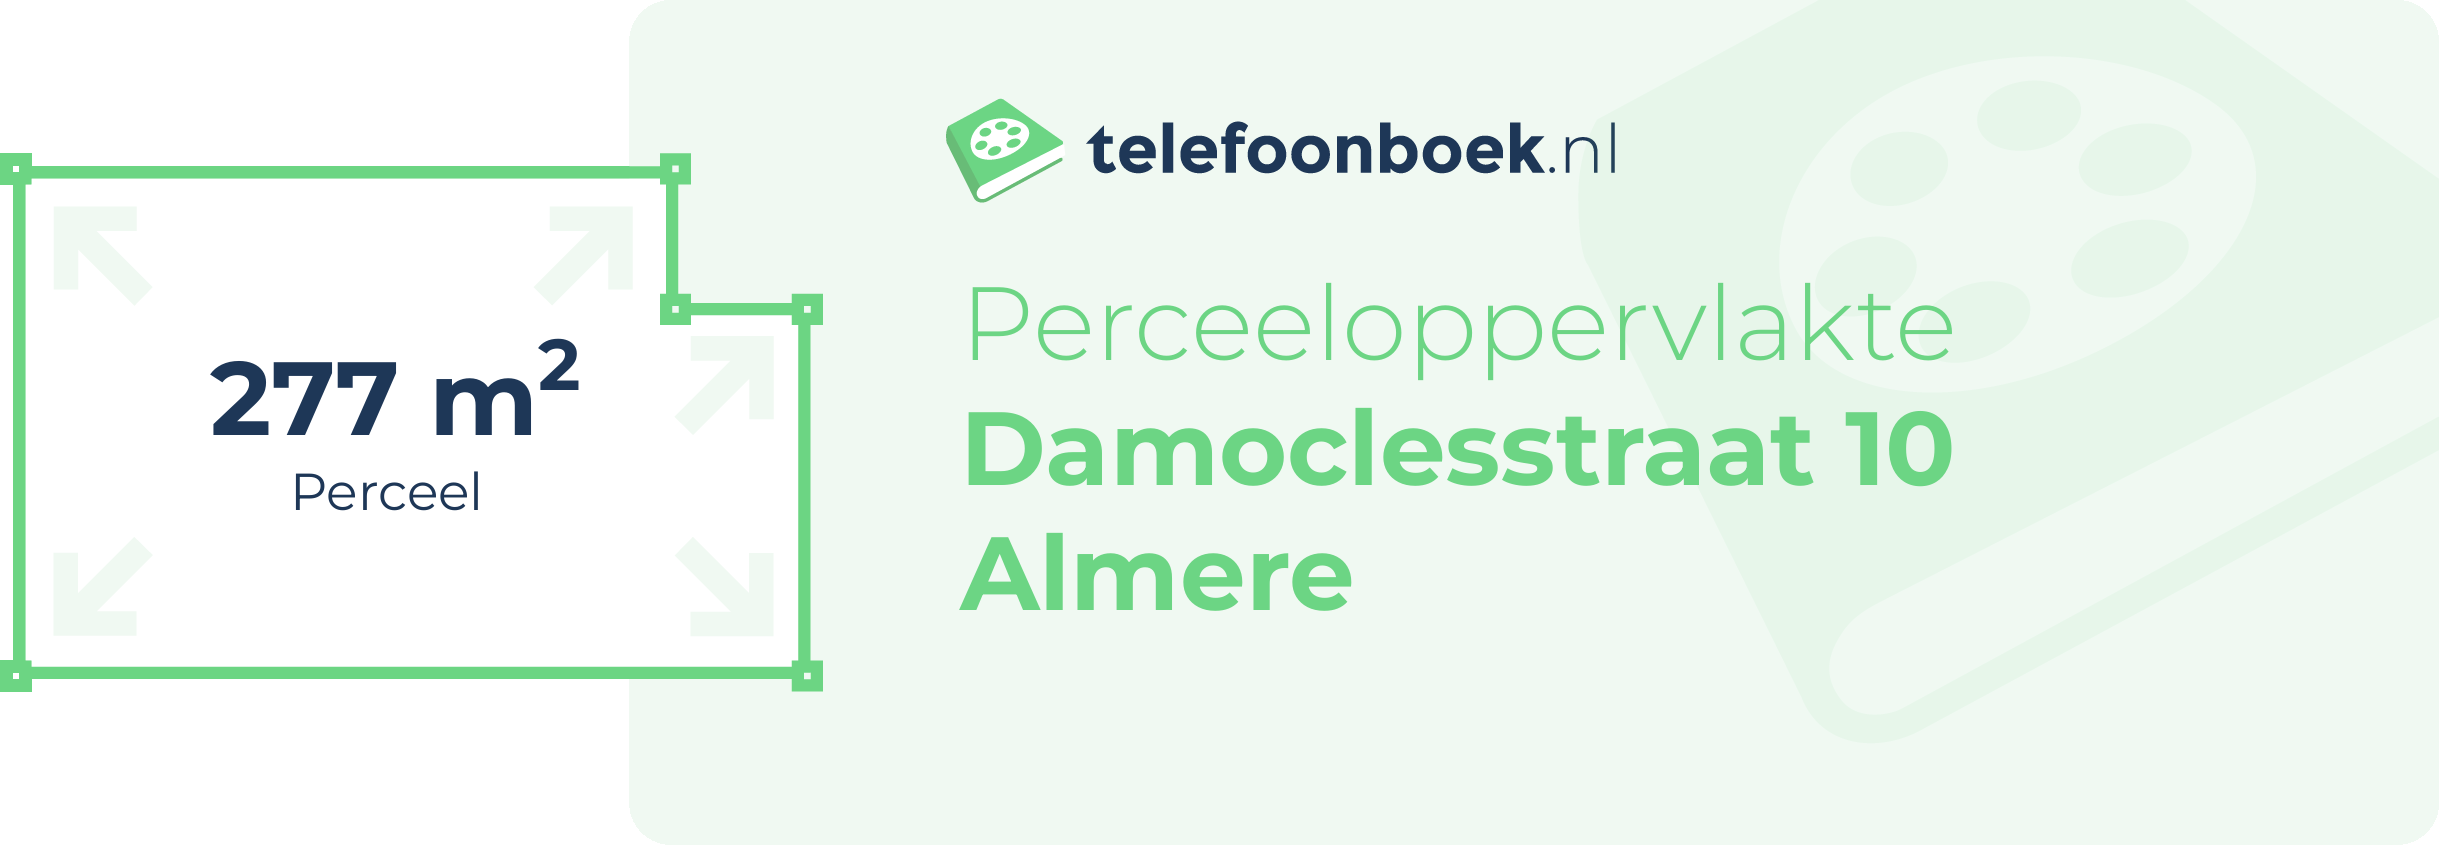 Perceeloppervlakte Damoclesstraat 10 Almere